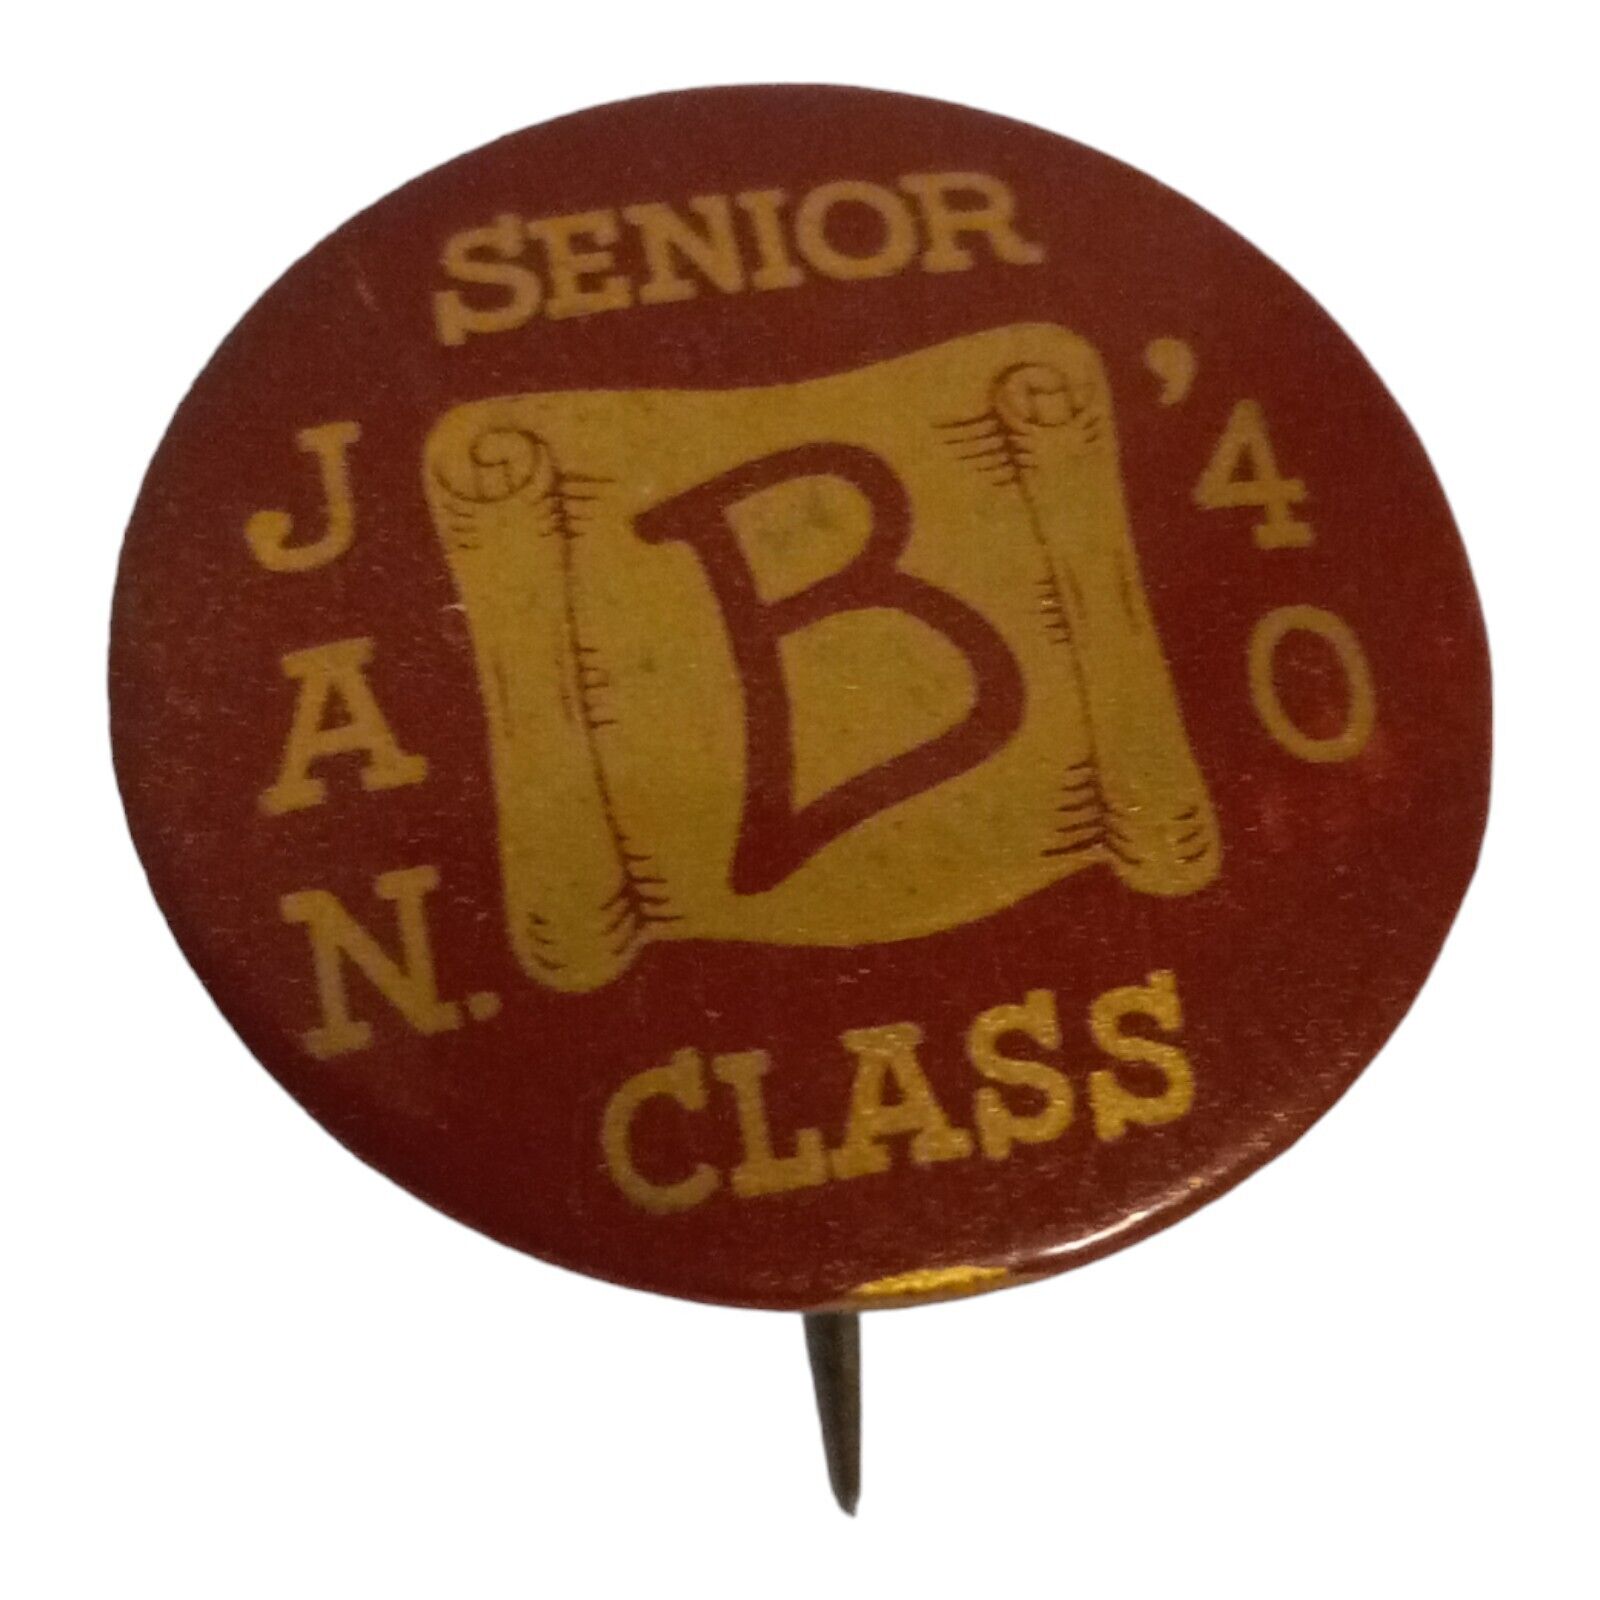 1940 Senior Class Button Pin Pinback Vtg